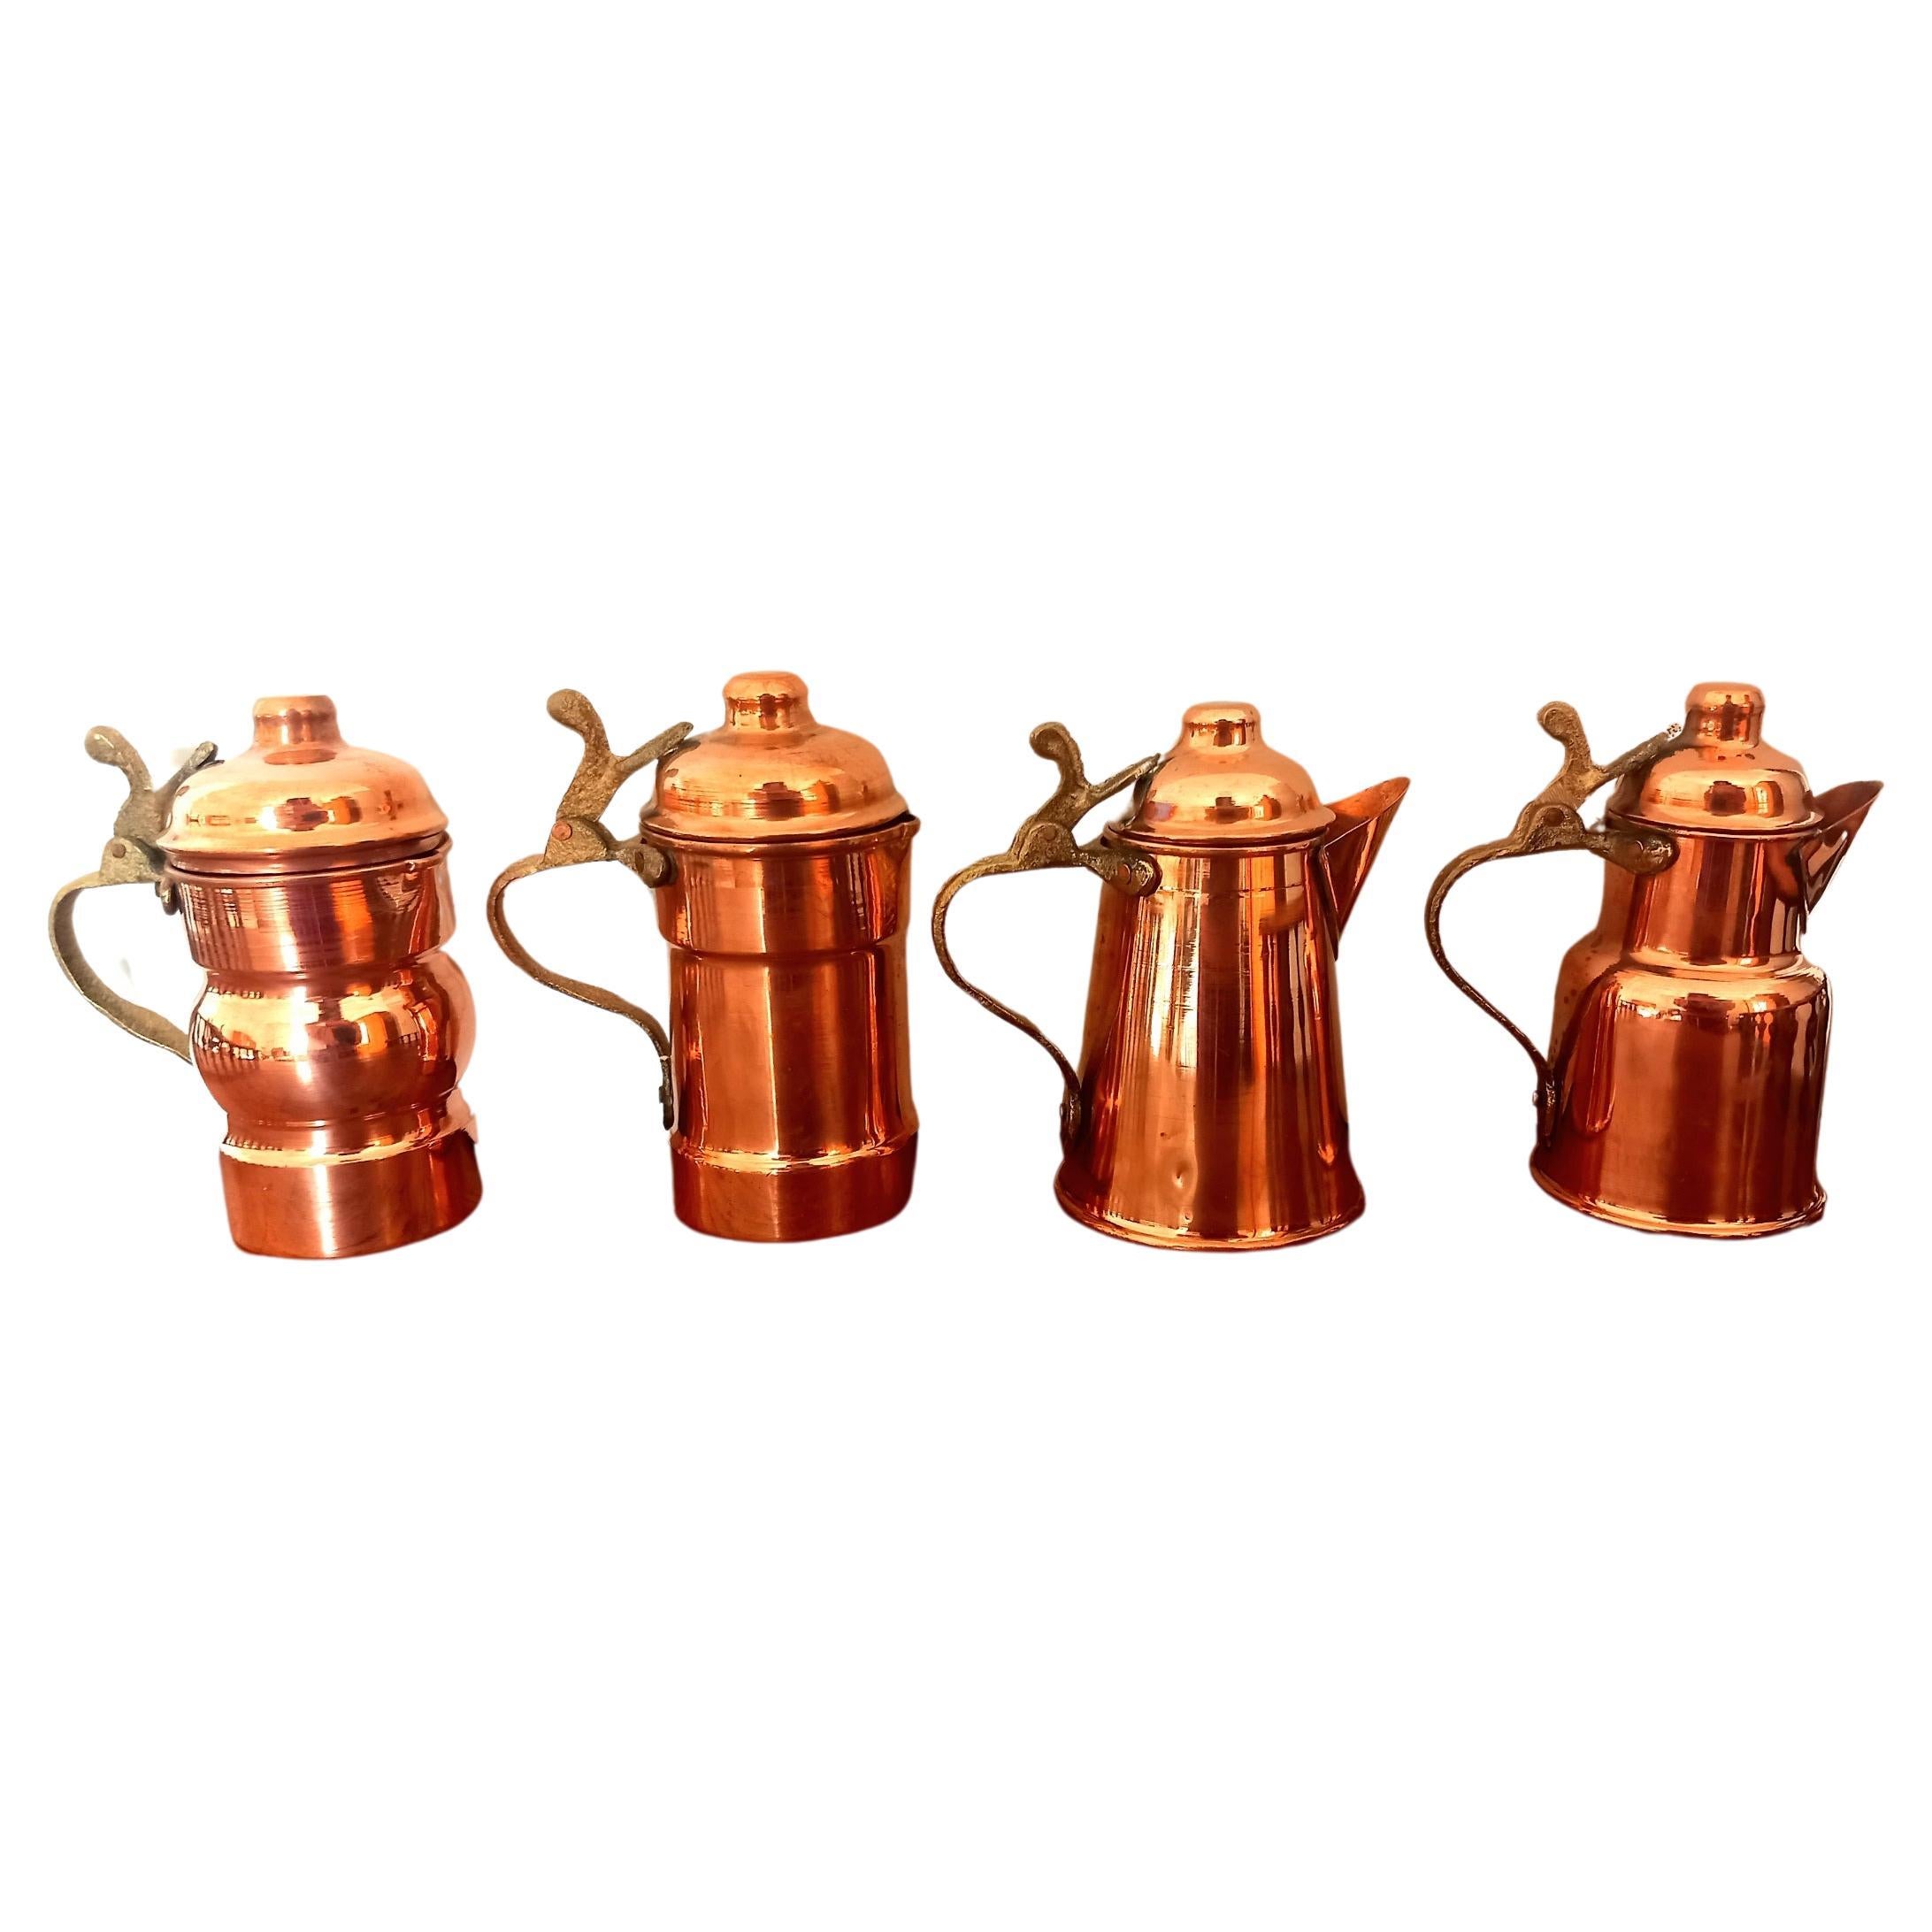  Copper Kitchen Decoration Vintage Coffee Pots For Rustic  Lot of Four Diferent